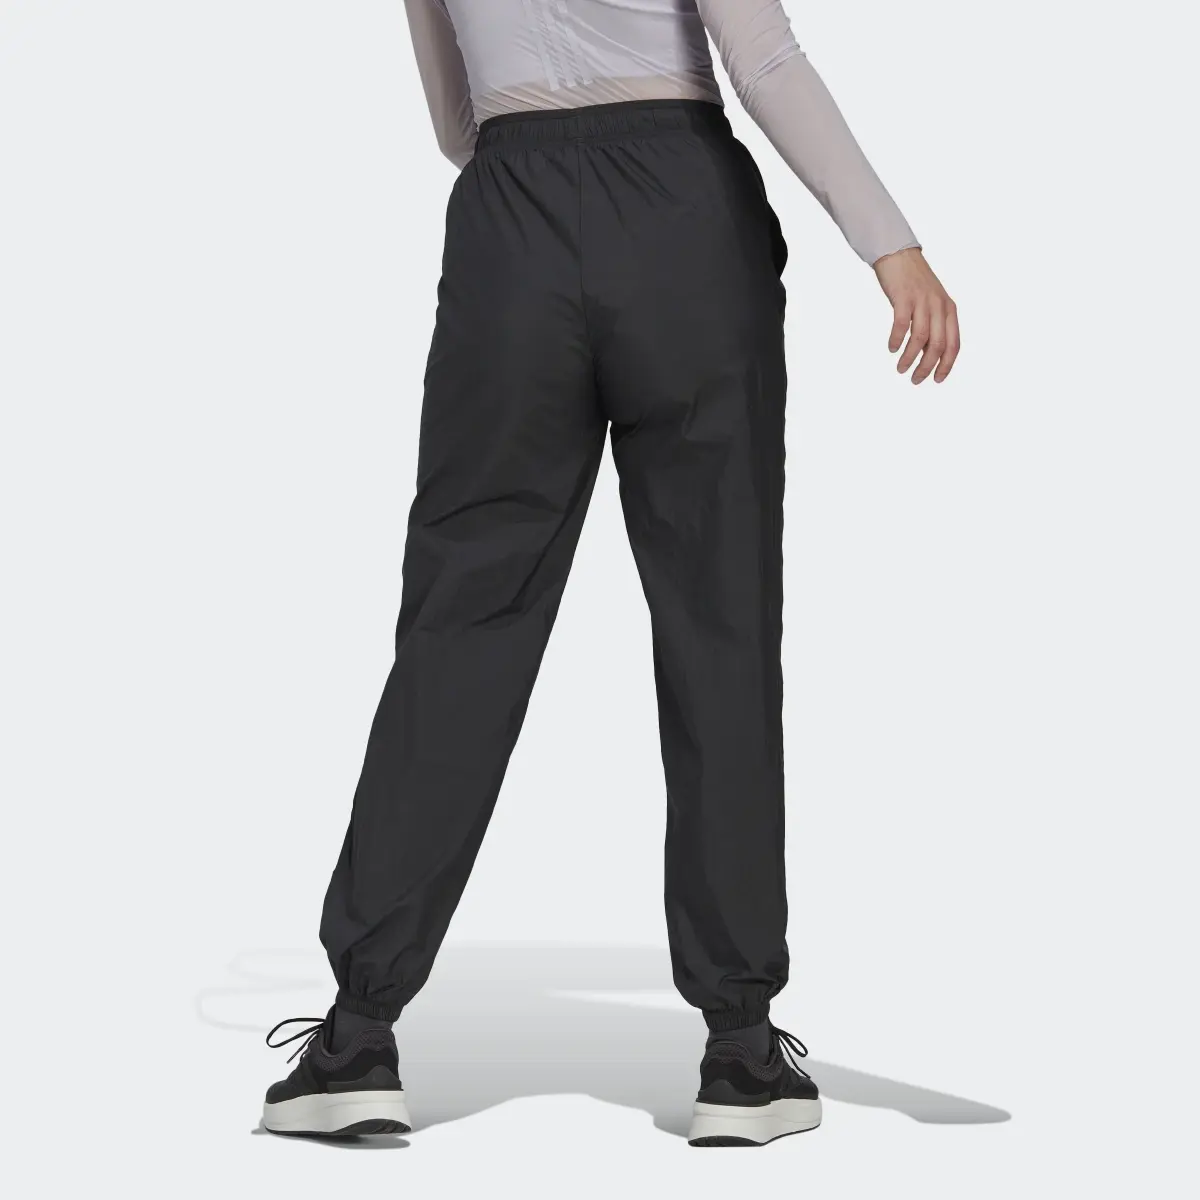 Adidas Woven Pants. 3